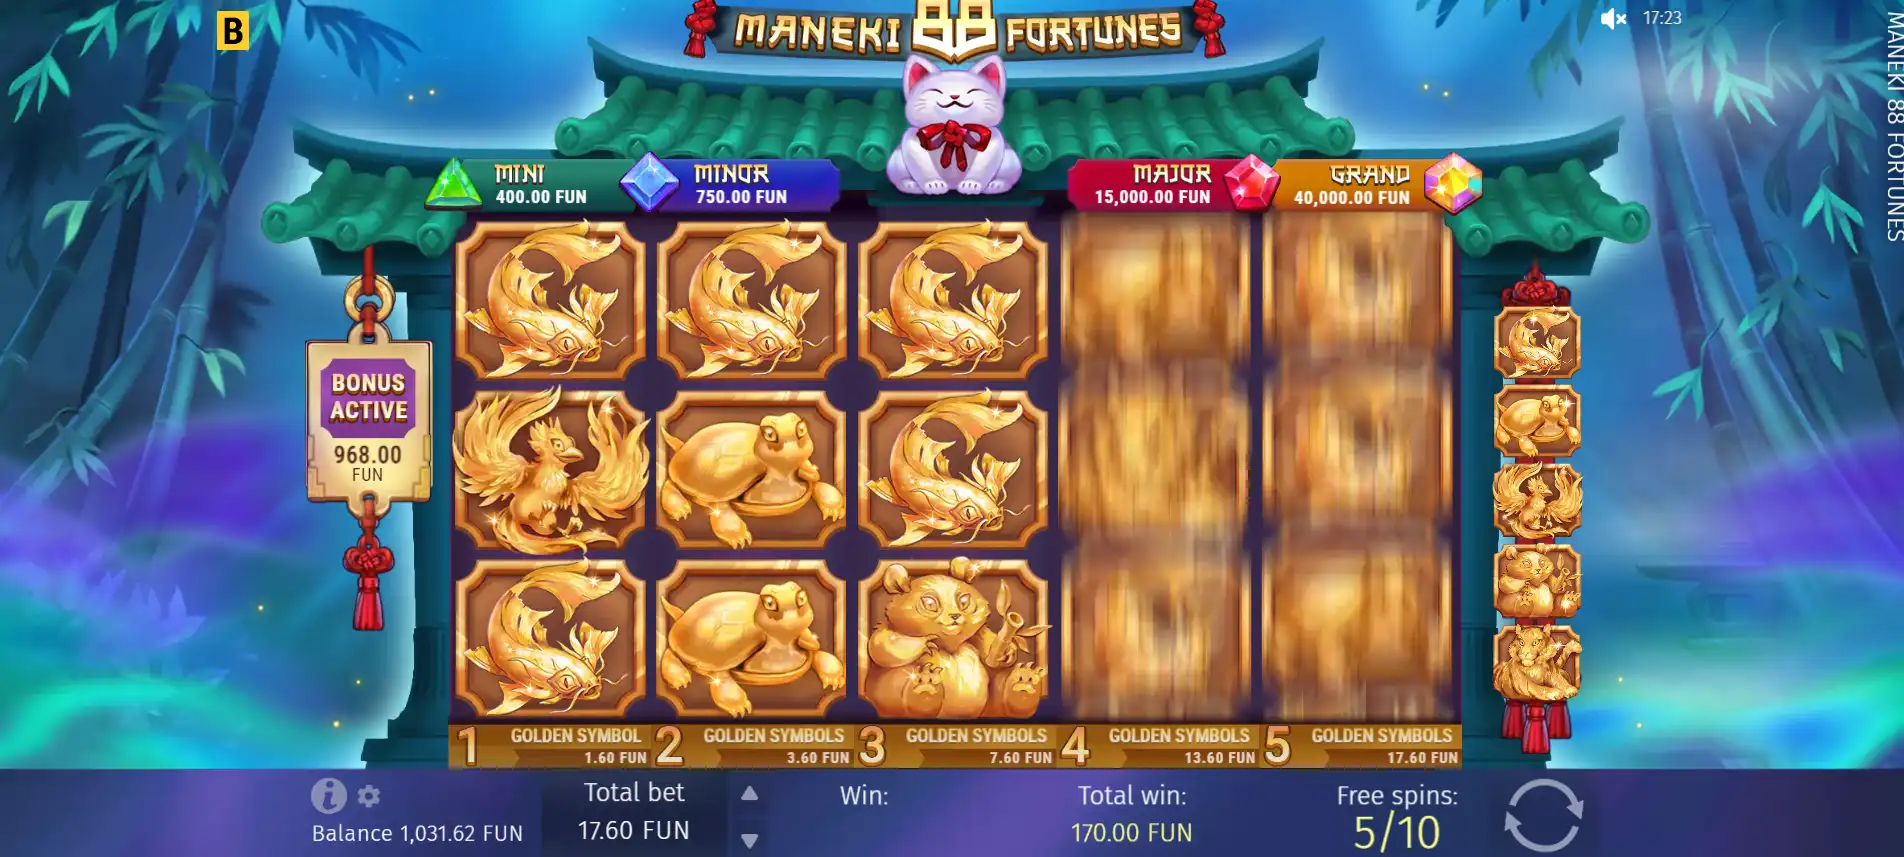 A gameplay image of bGaming's Maneki 88 Fortunes